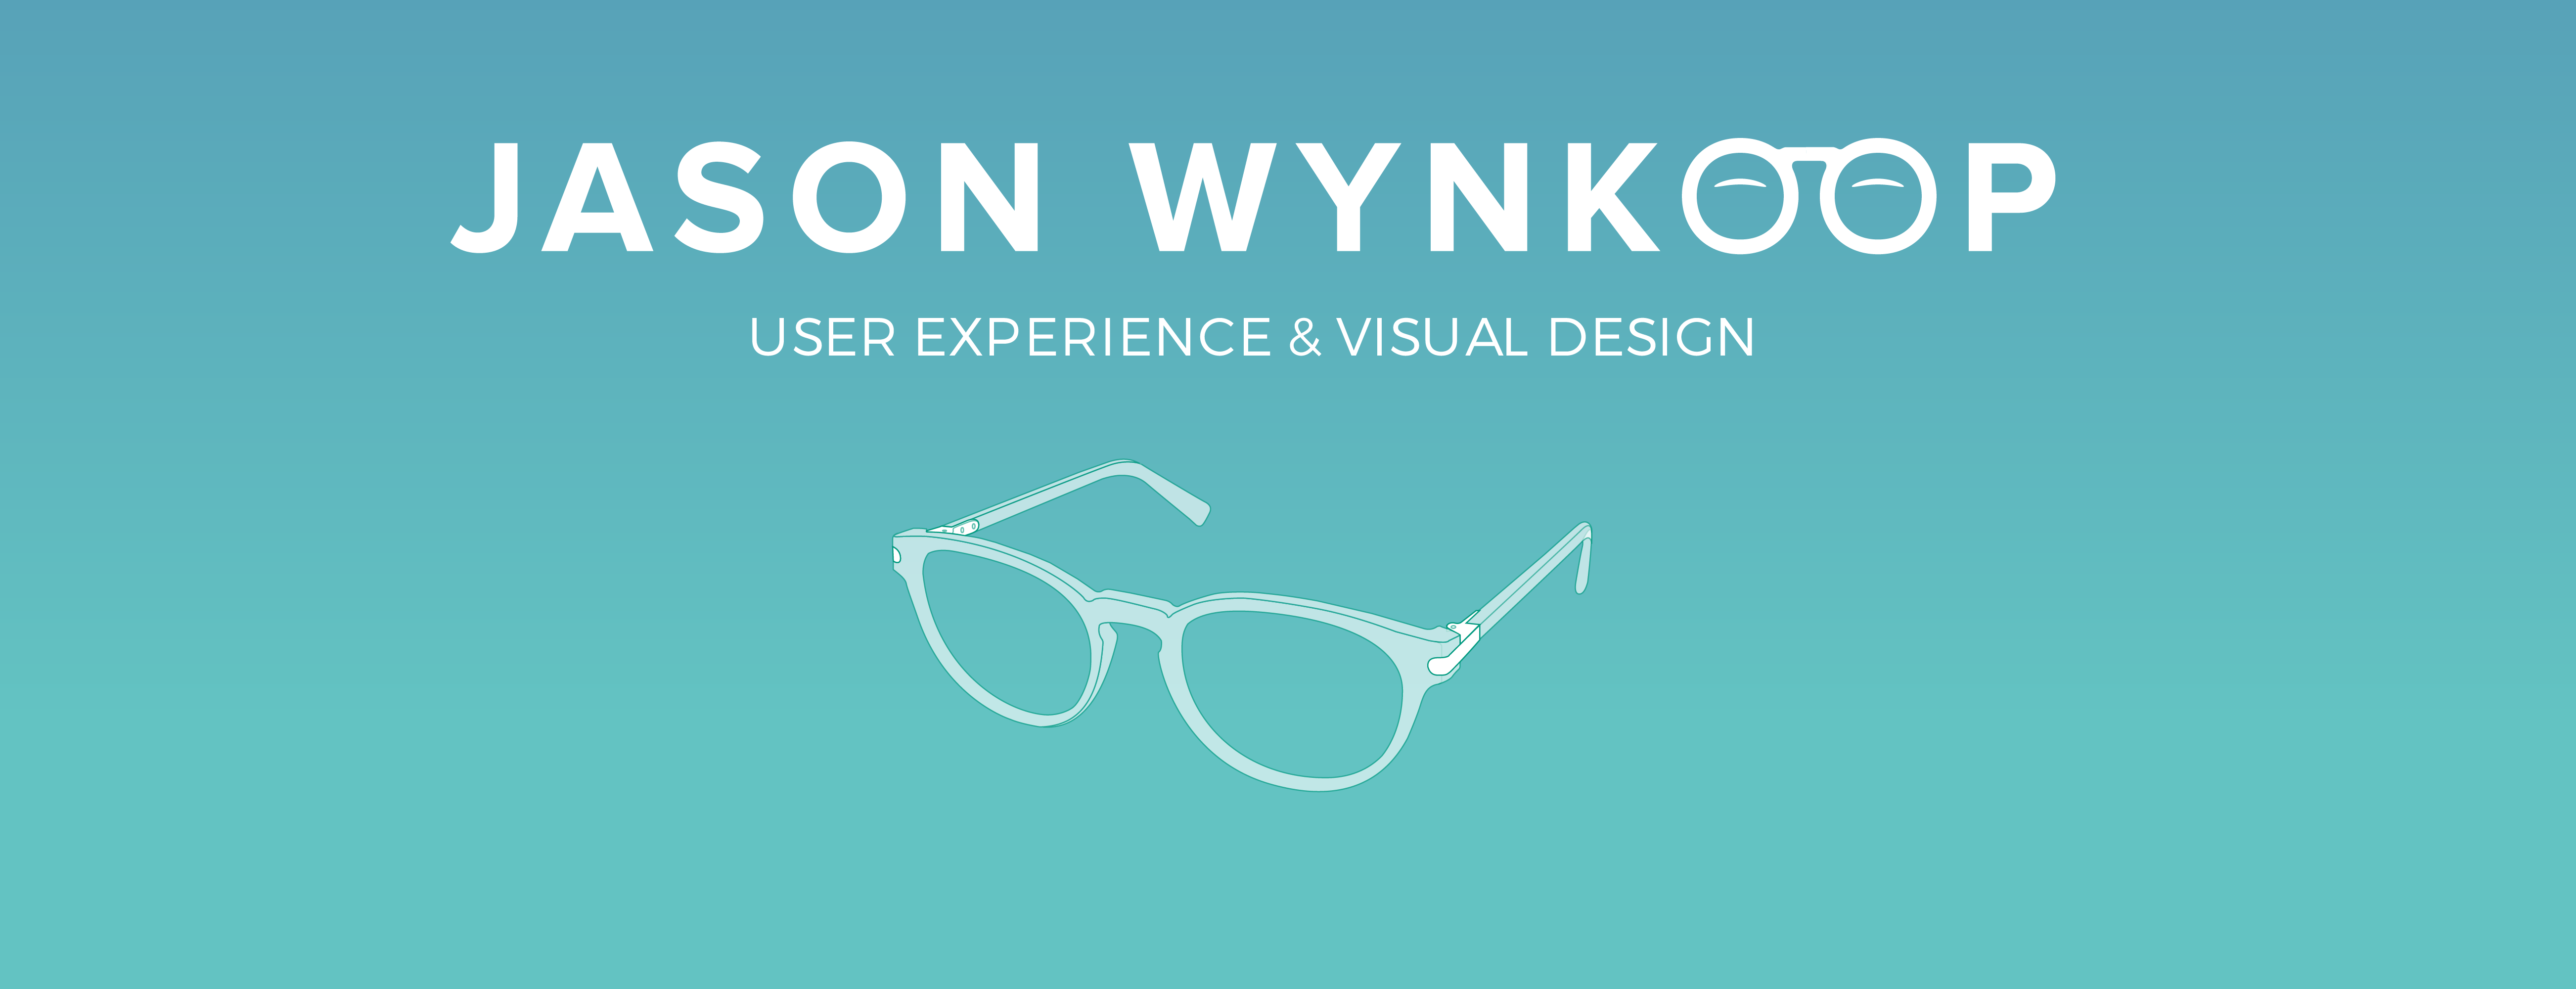 Jason Wynkoop User Experience and Visual Design